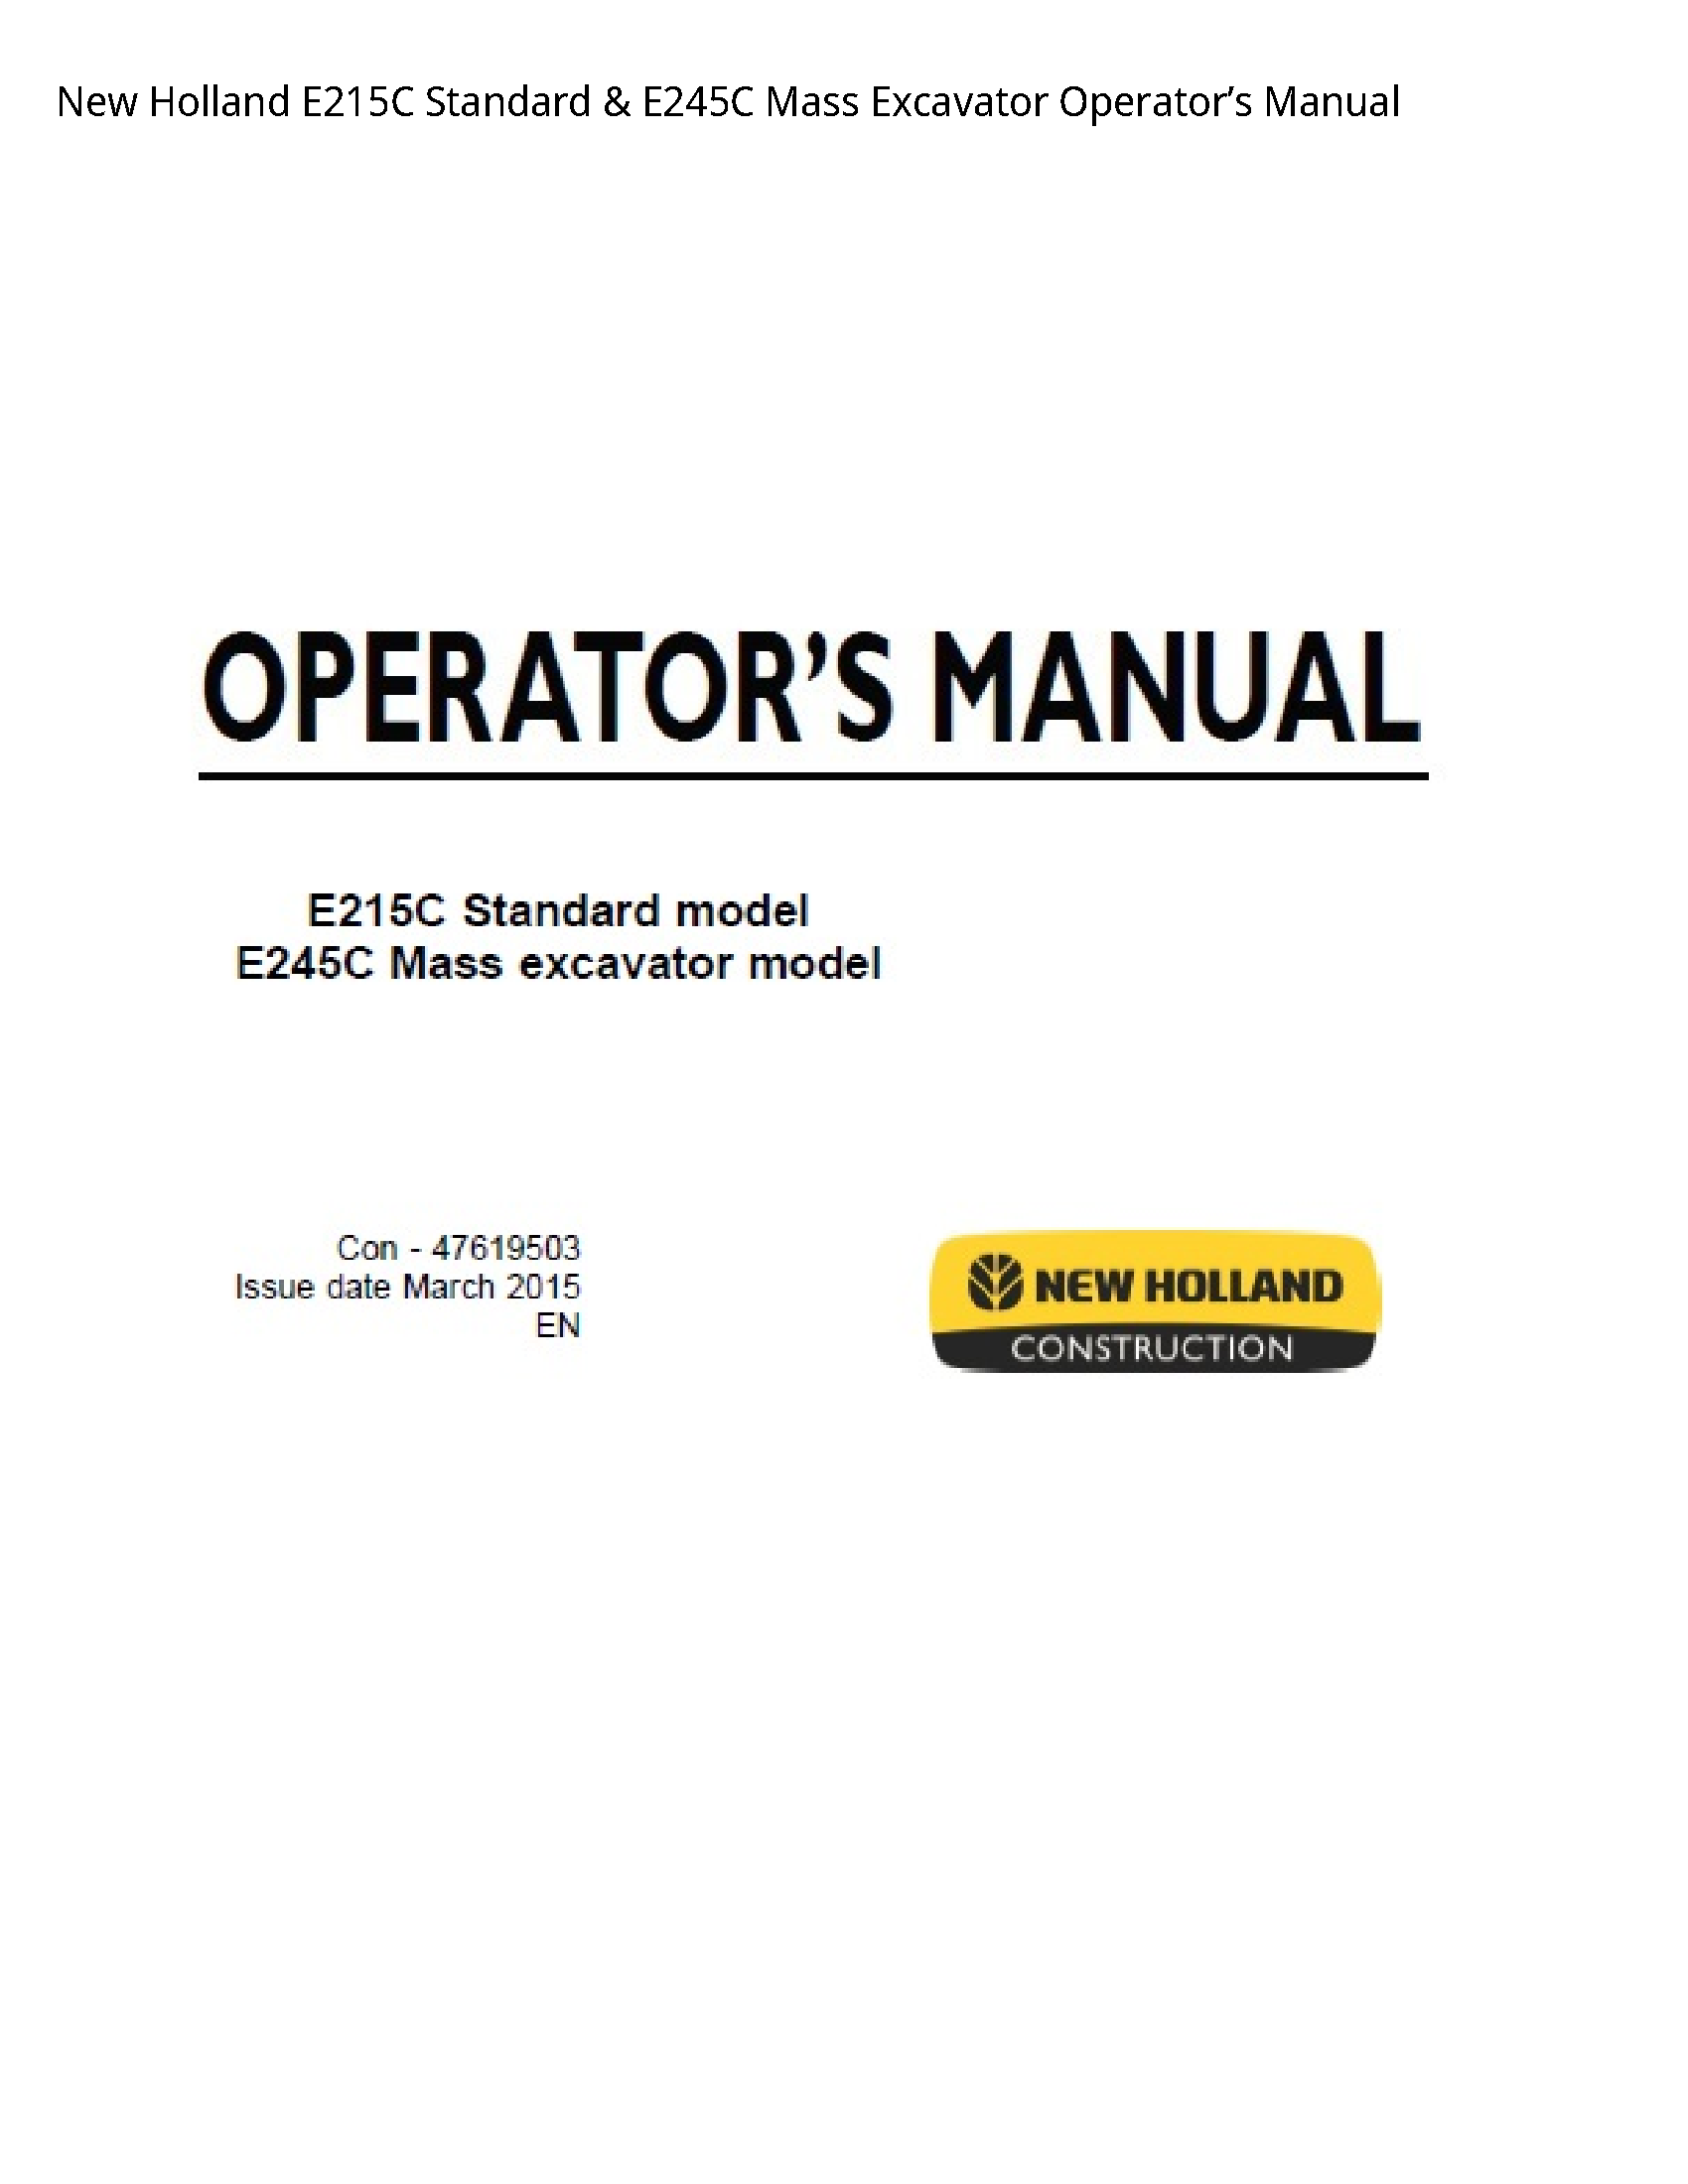 New Holland E215C Standard Mass Excavator Operator’s manual